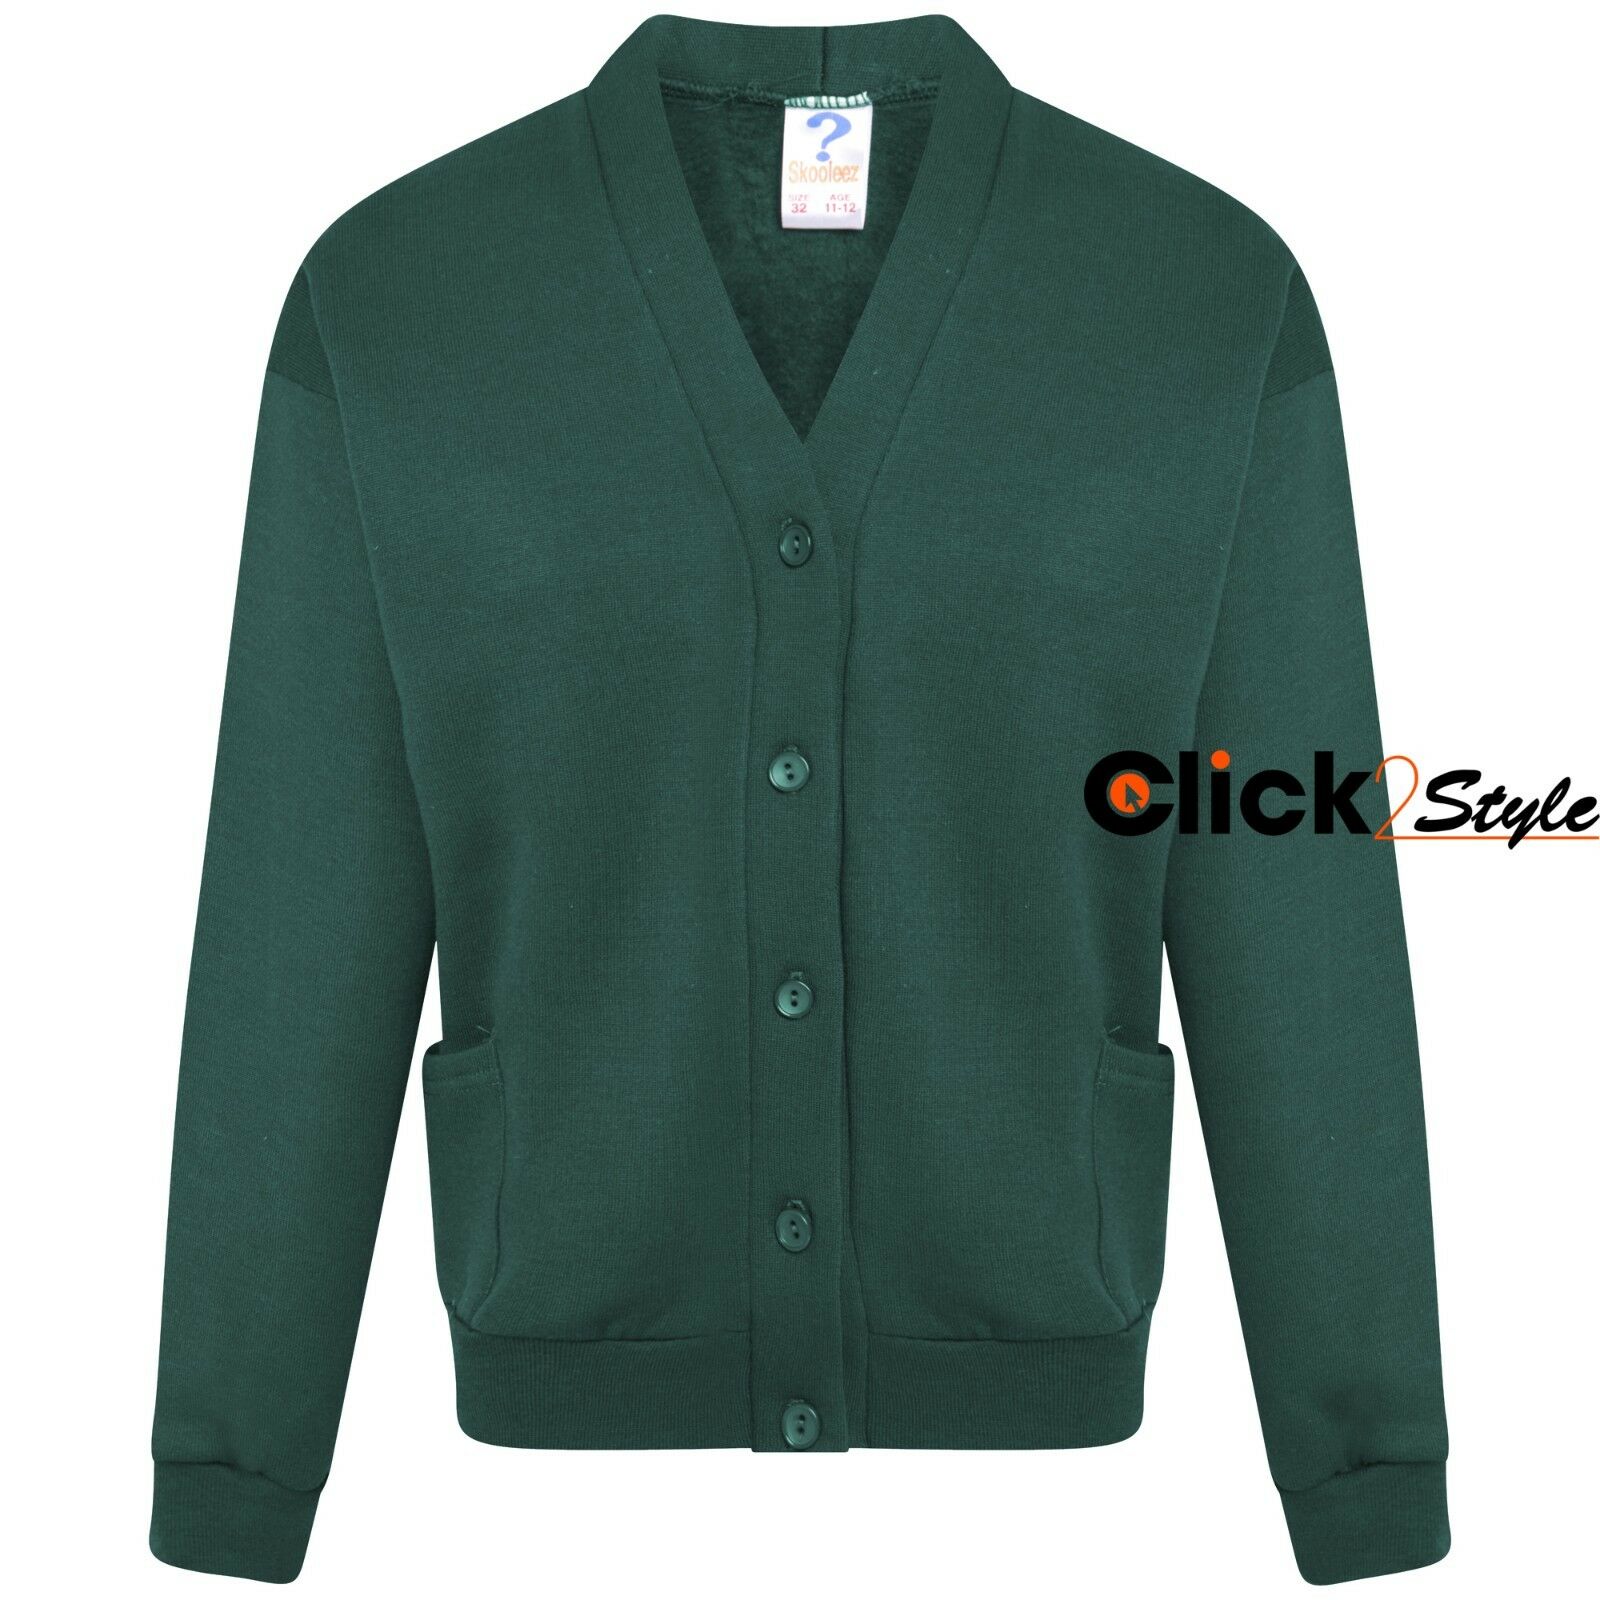 Kids Children Girls Unisex School Uniform Fleece Cardigan Button Closure Front -Green